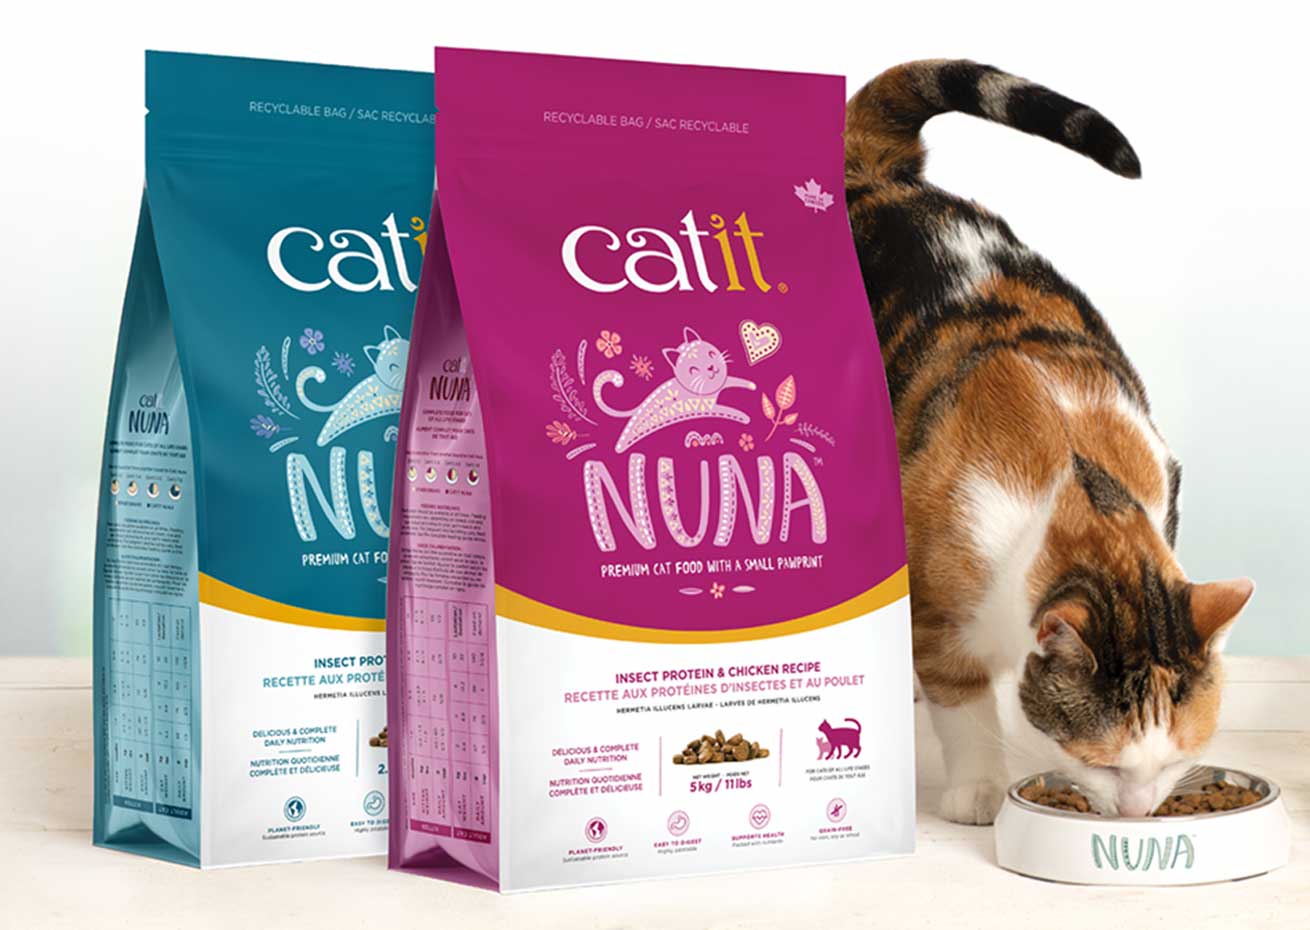 Catit Nuna packaging